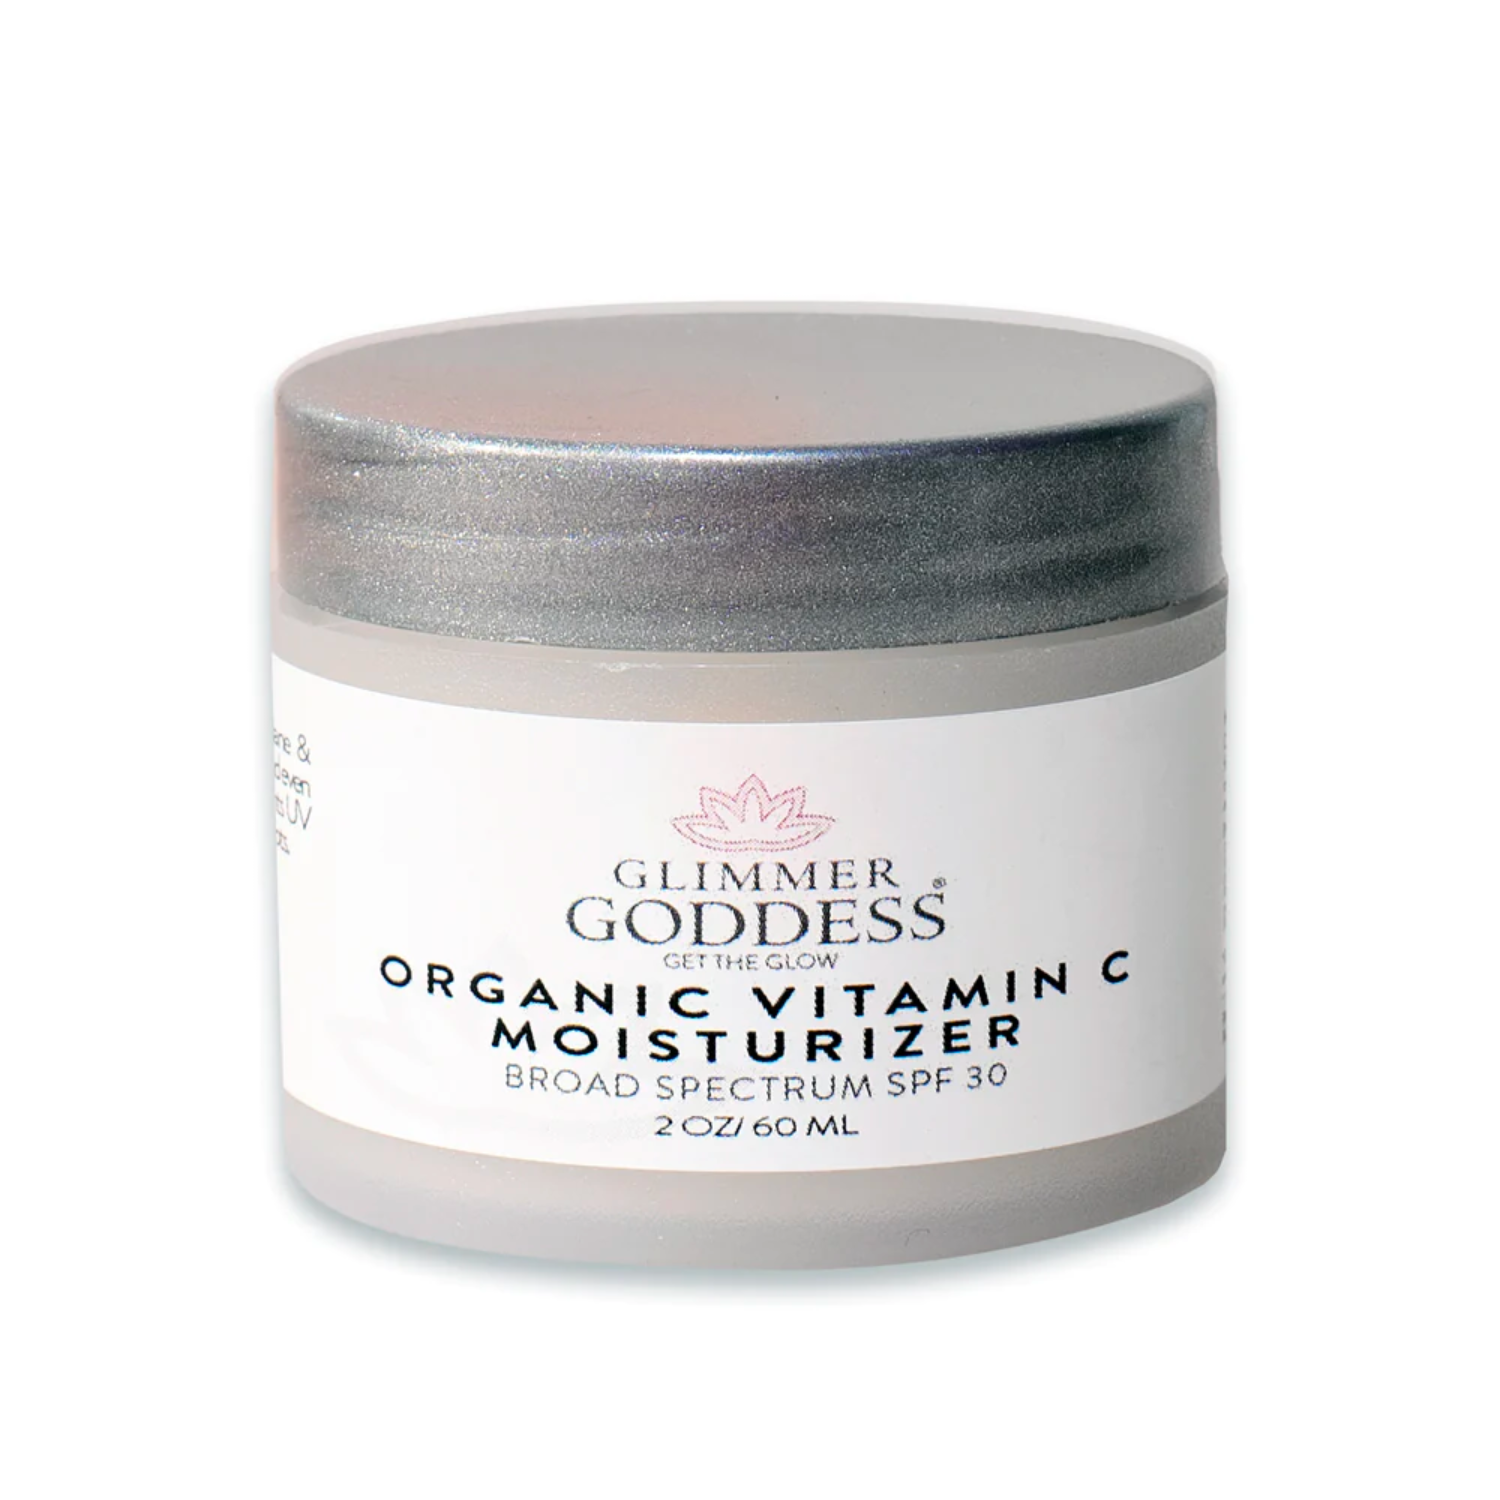 Organic vitamin c moisturizer